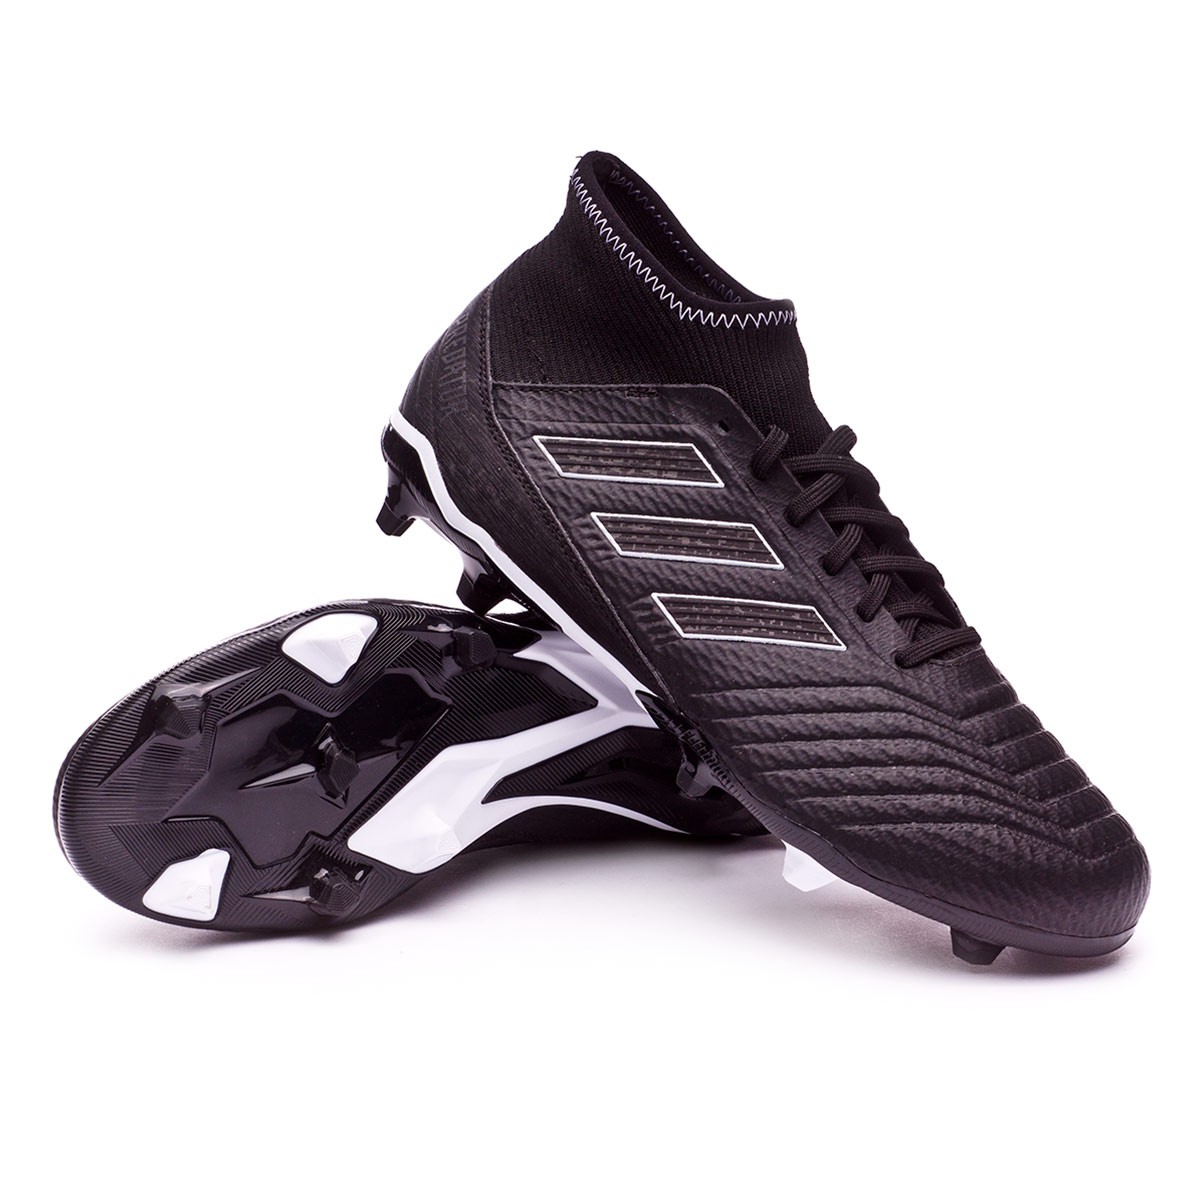 Football Boots adidas Predator 18.3 FG 